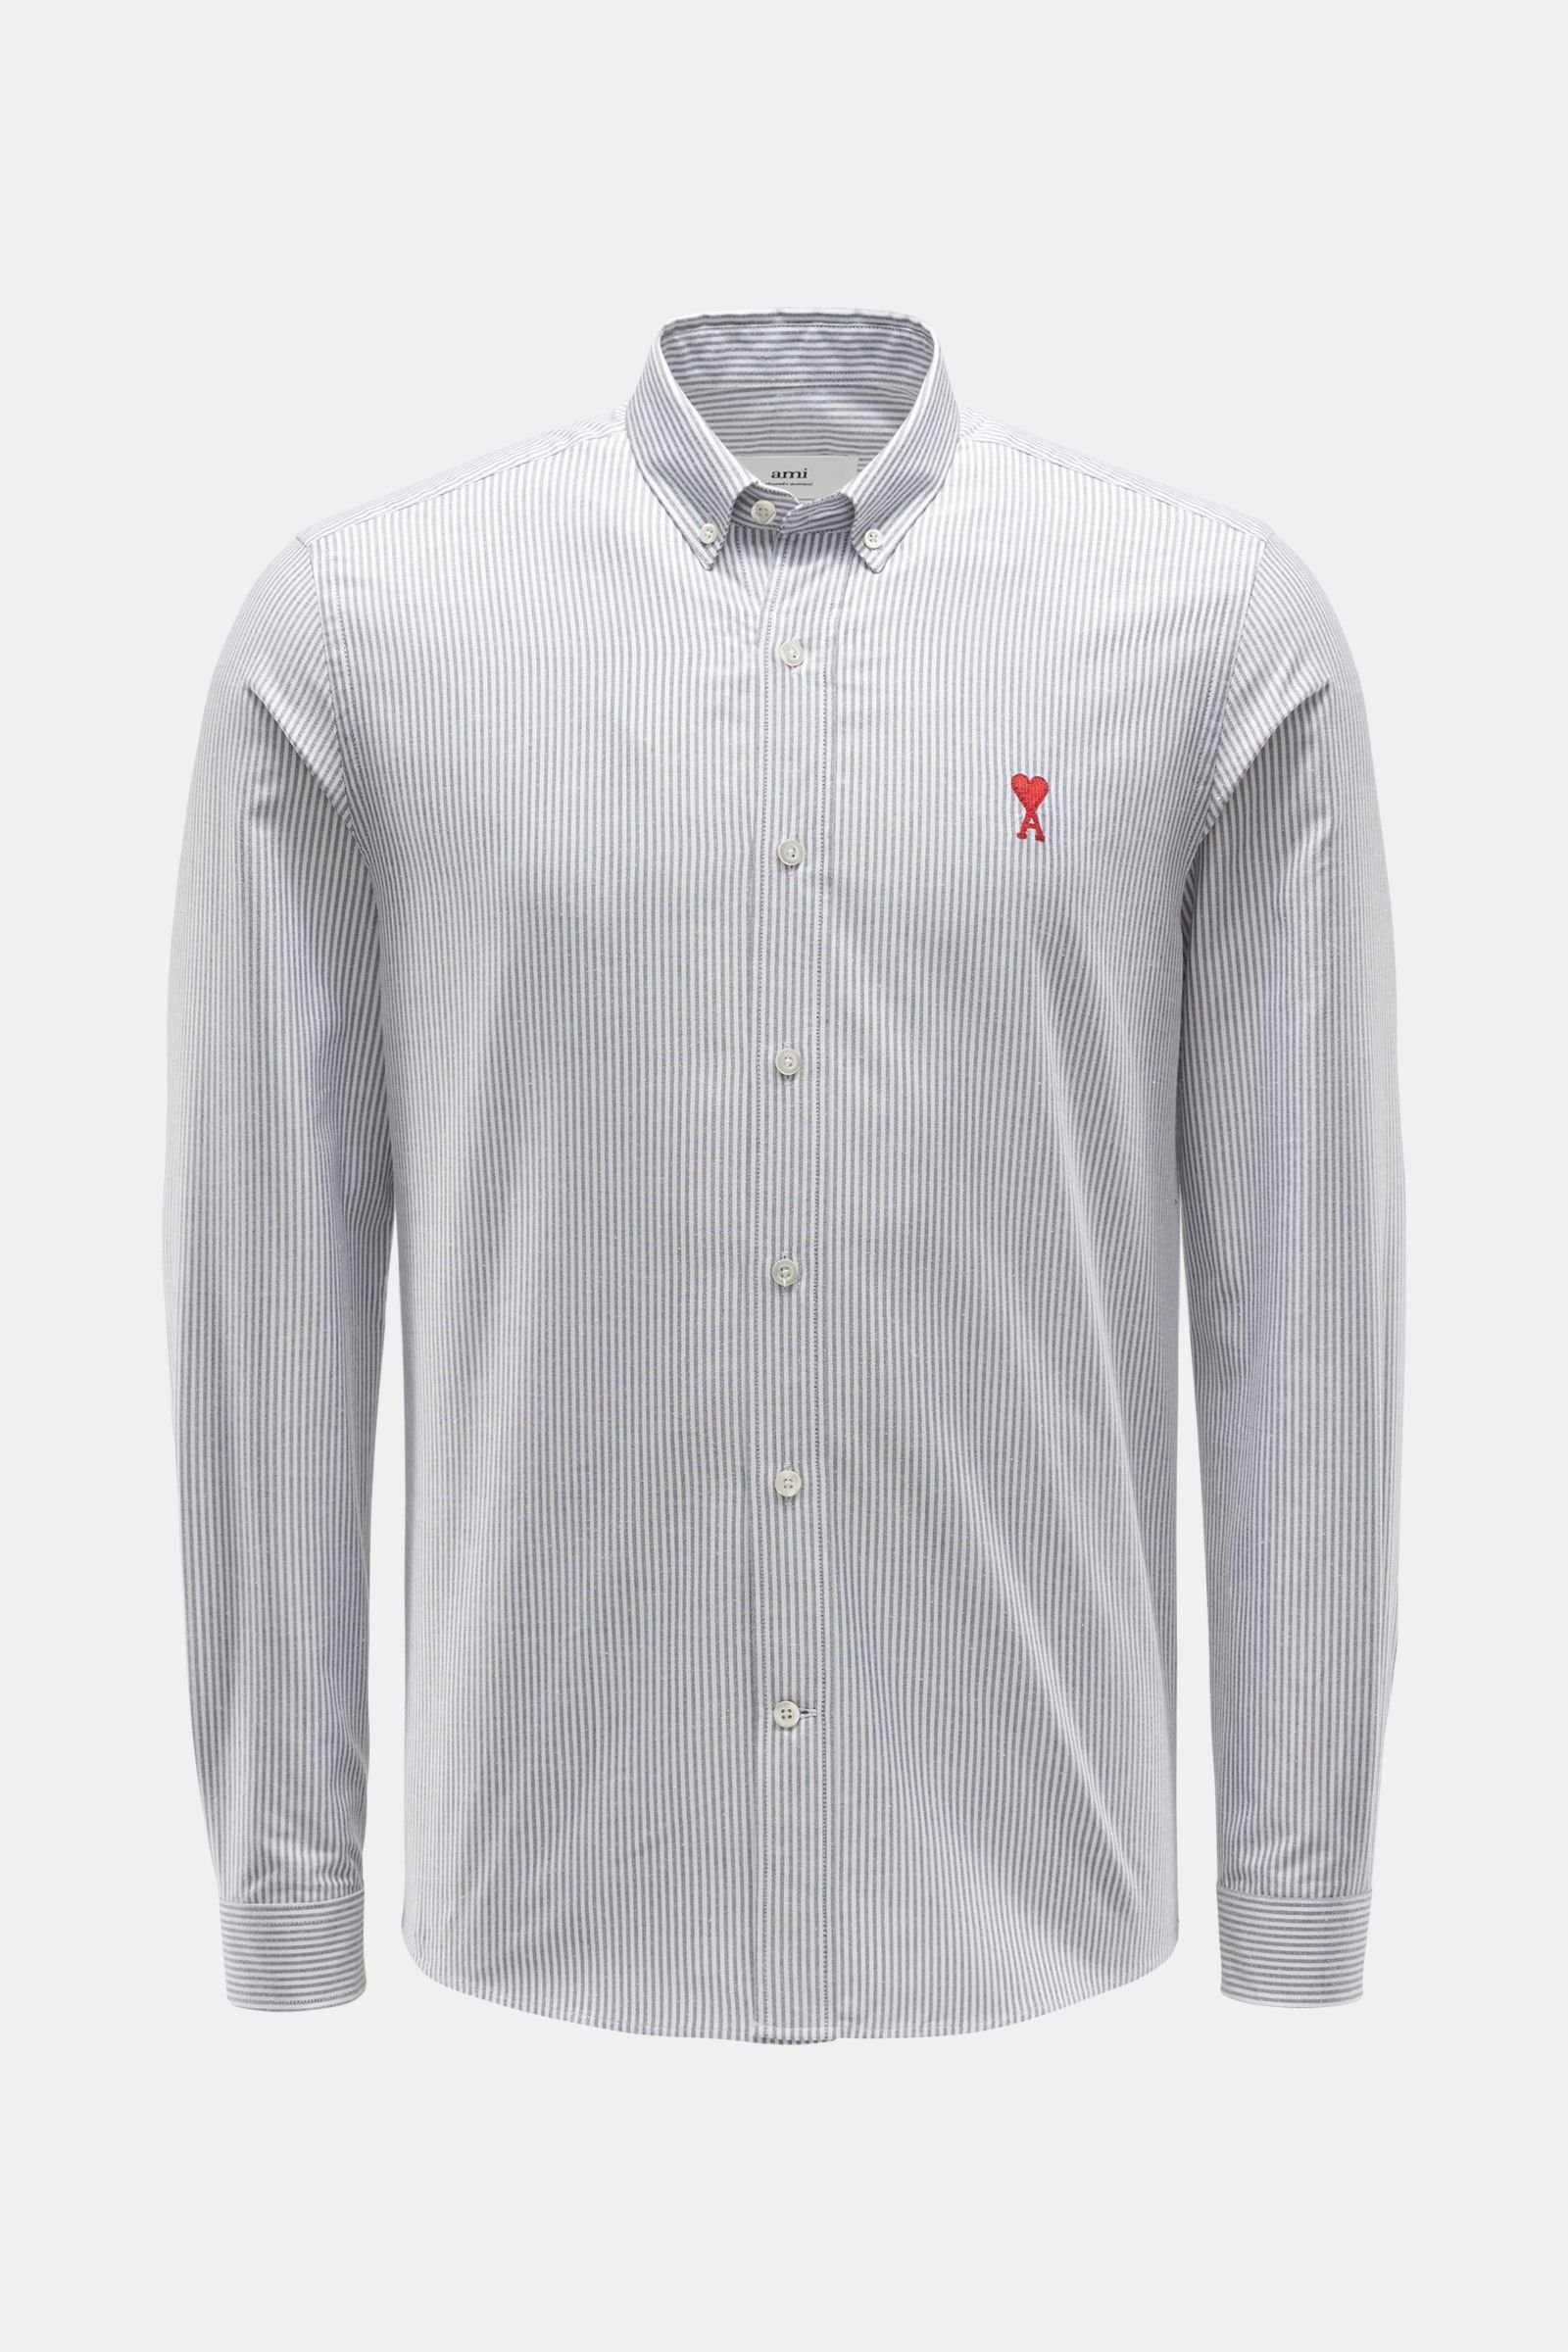 Oxford shirt button-down collar black/white striped